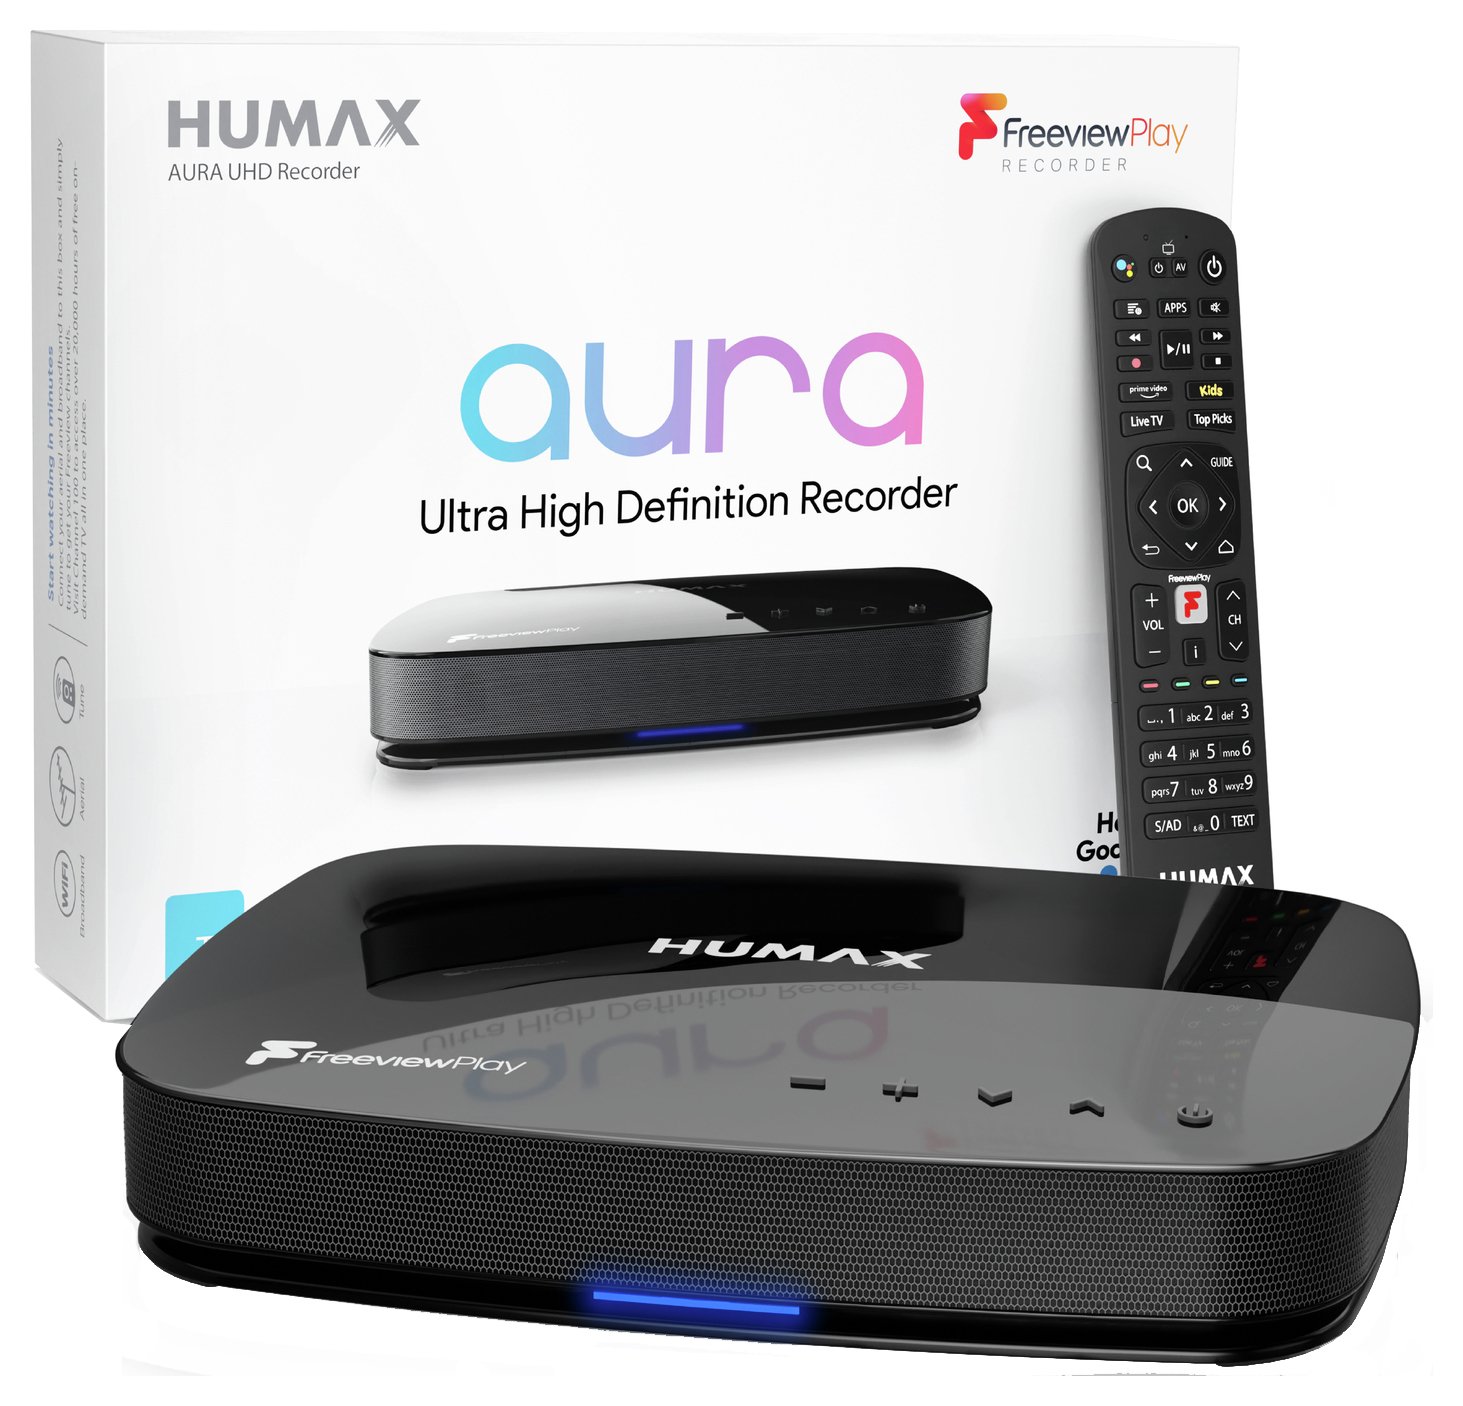 Humax Aura 1TB Smart Freeview Play 4K TV Recorder